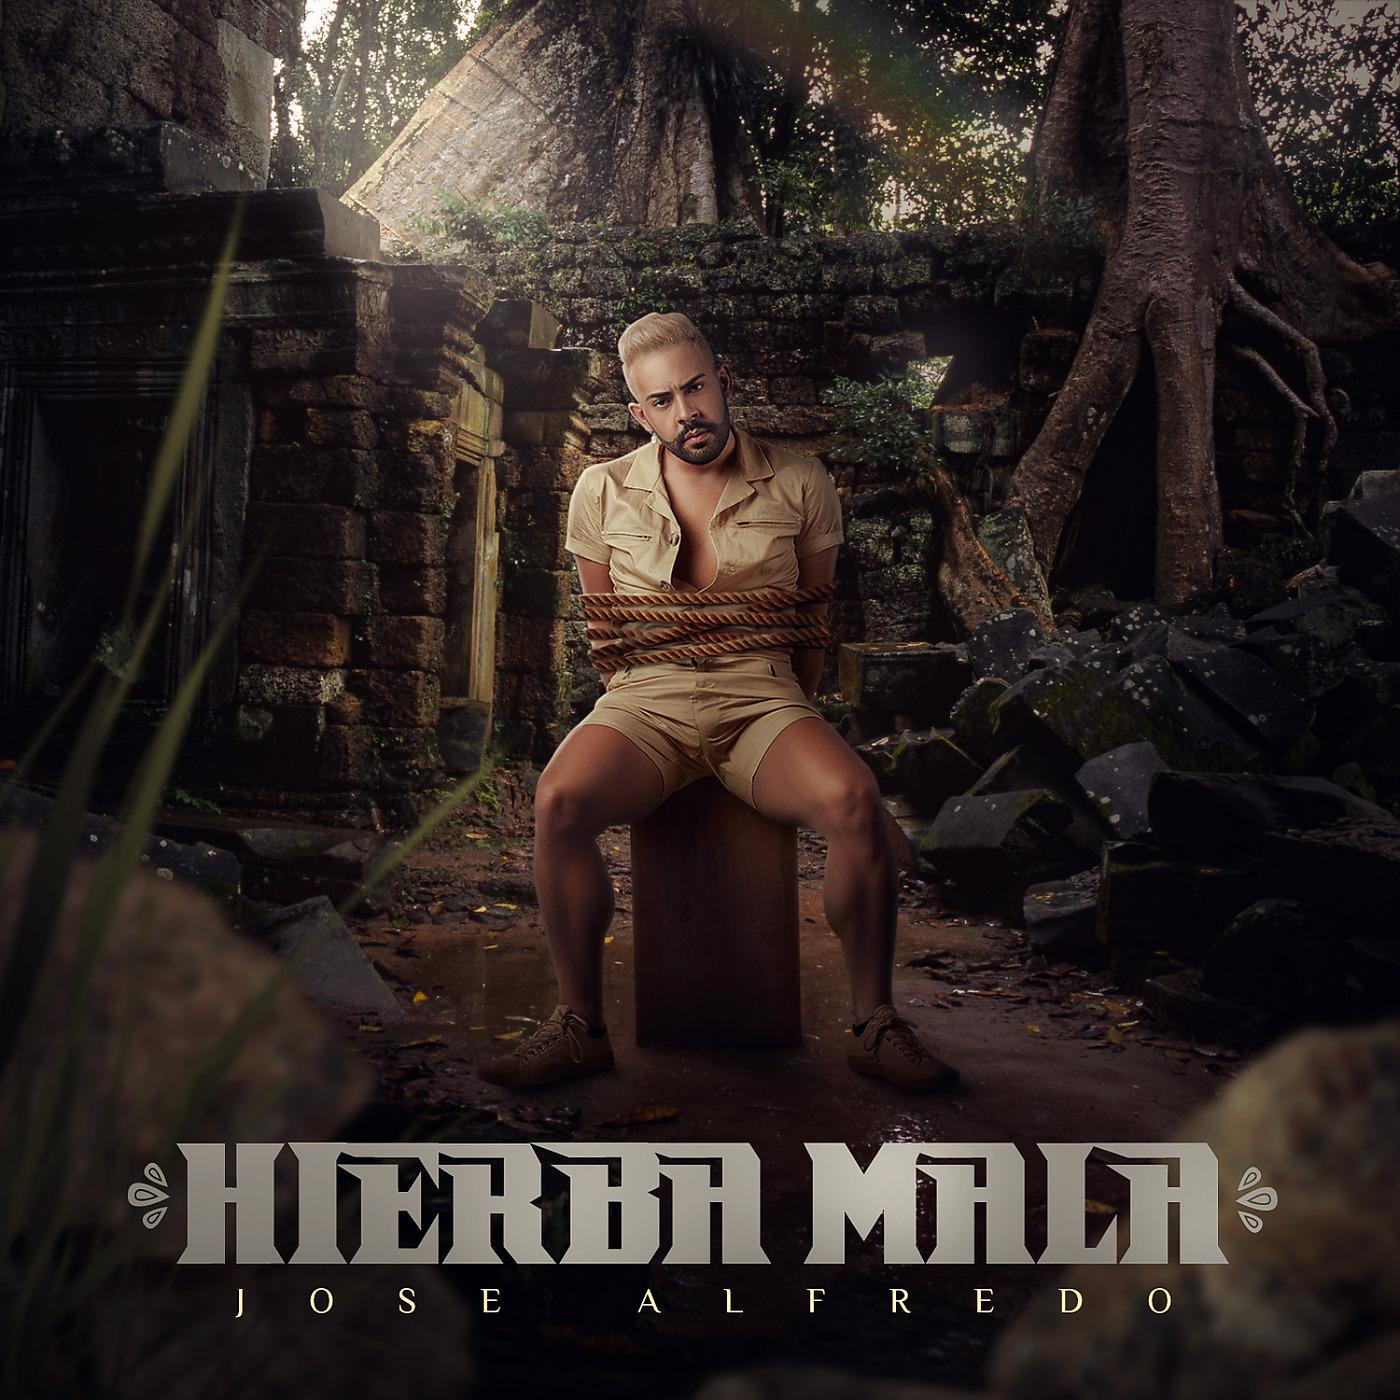 Постер альбома Hierba Mala